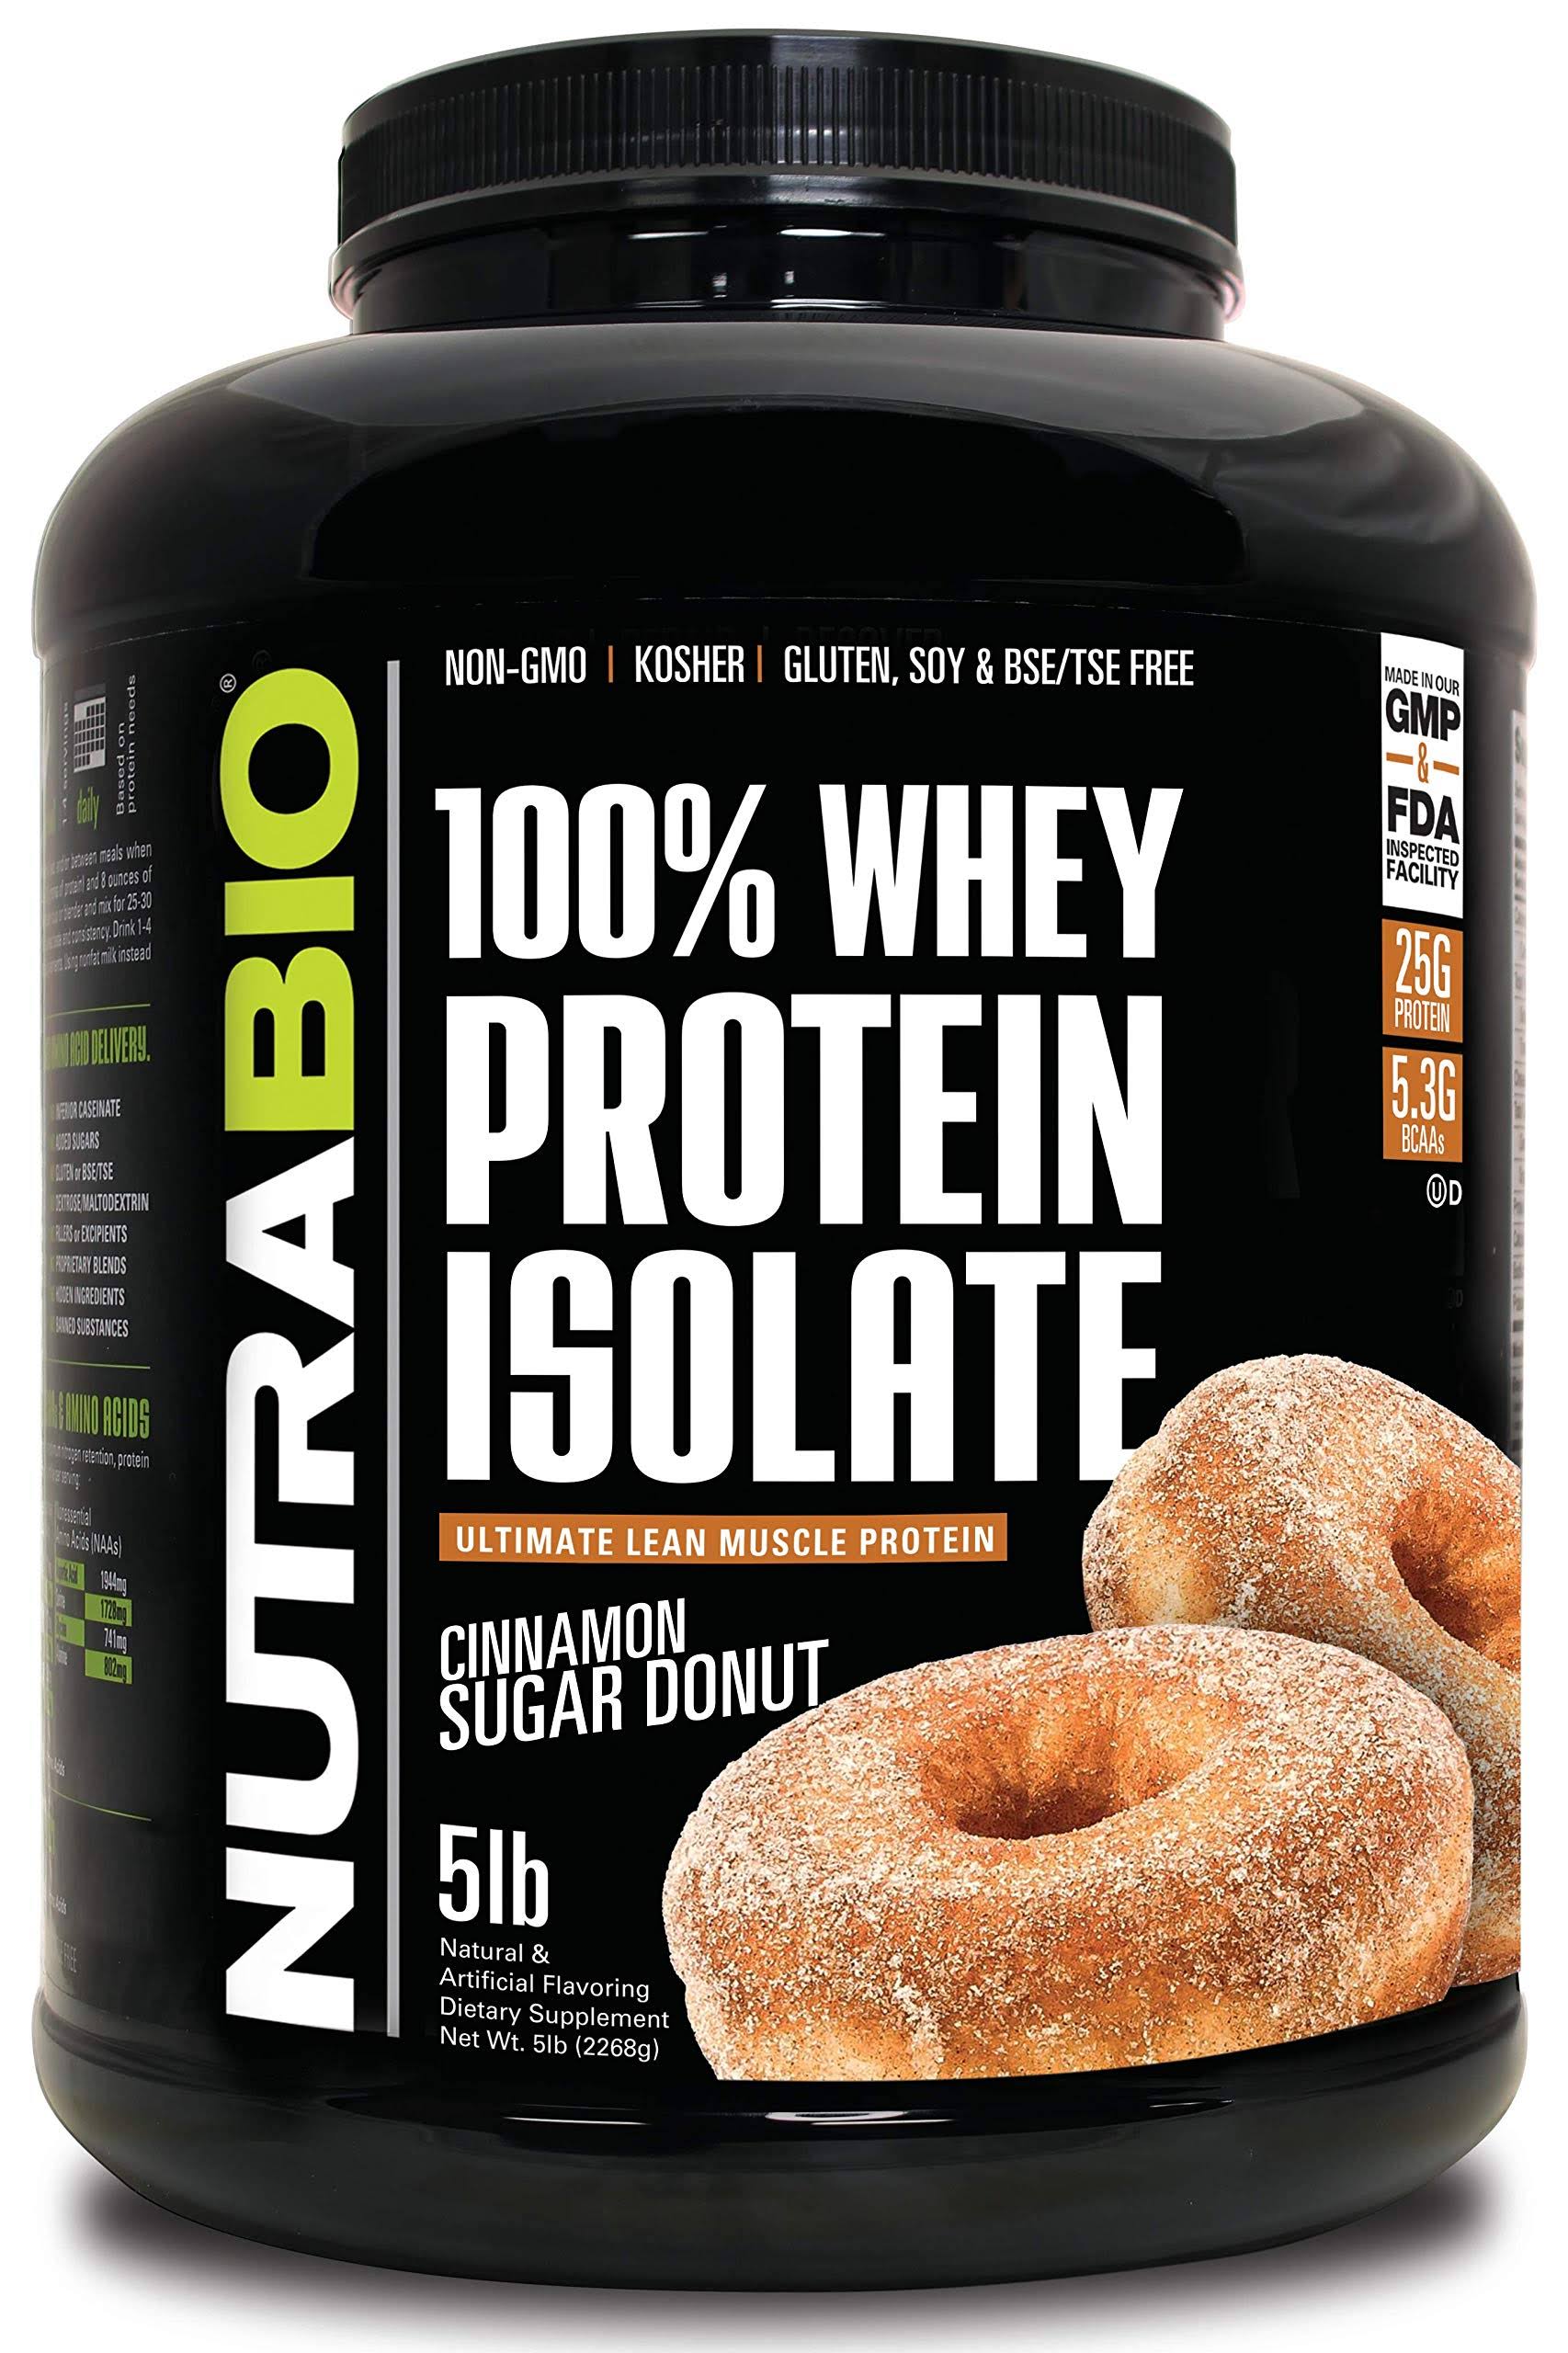 NutraBio Whey Protein Isolate Dietary Supplement - Cinnamon Sugar, 5lbs